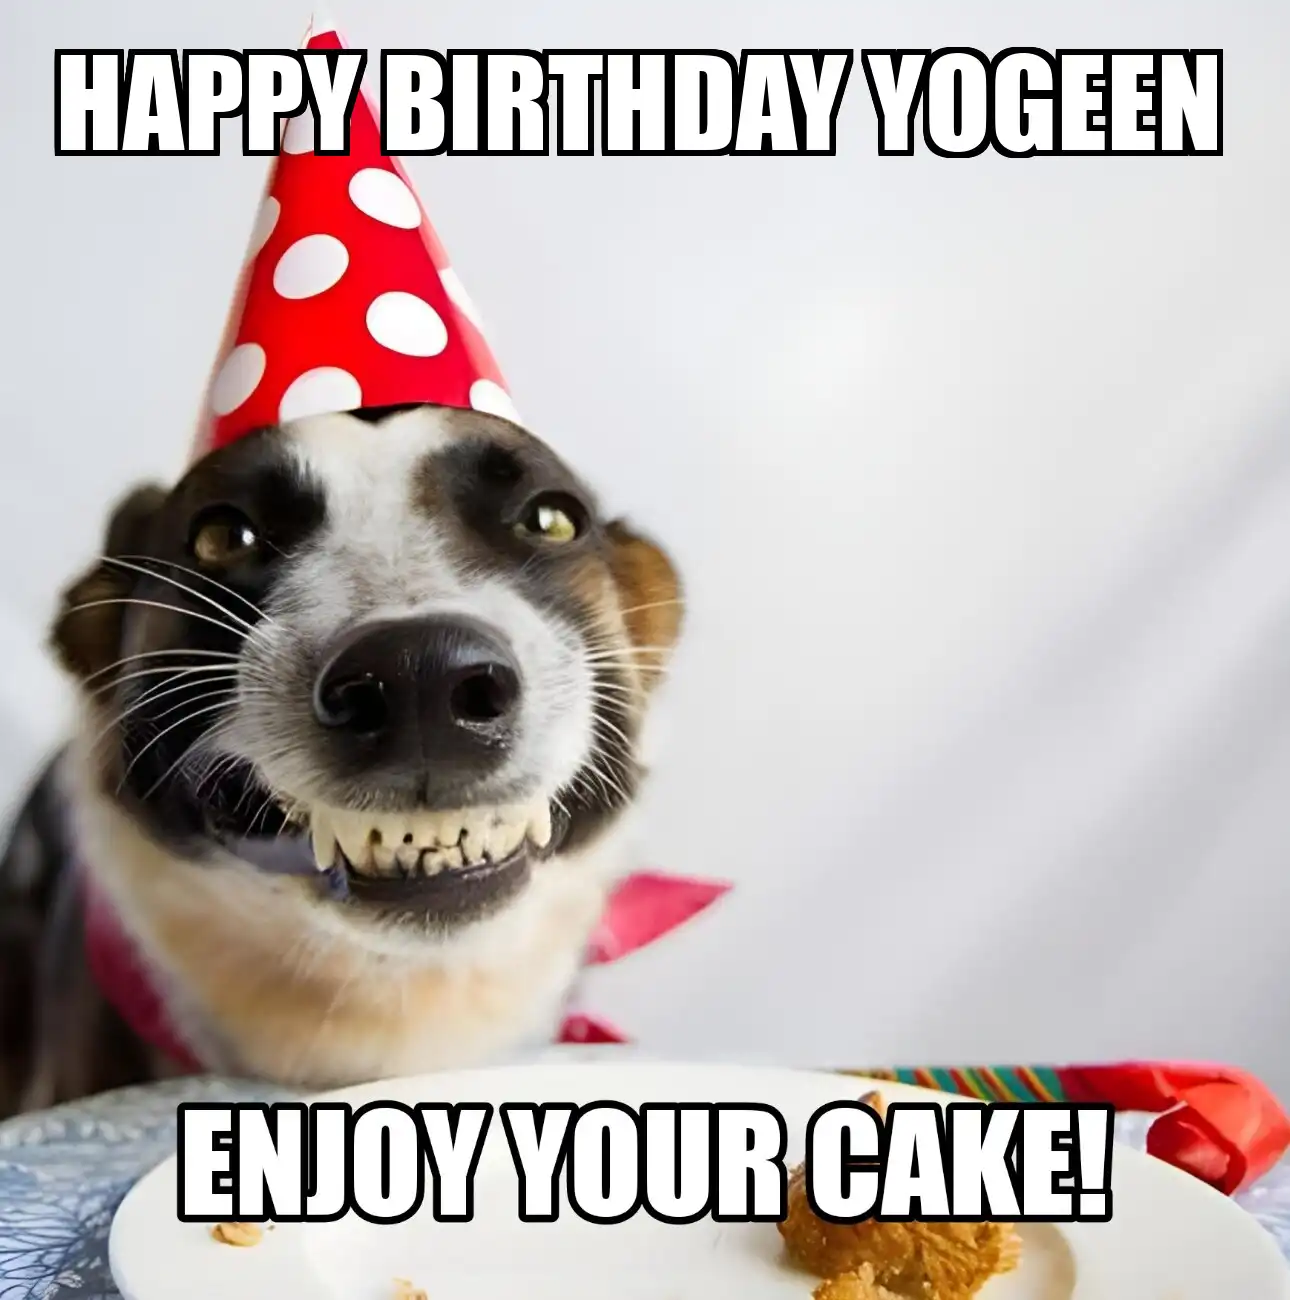 Happy Birthday Yogeen Enjoy Your Cake Dog Meme